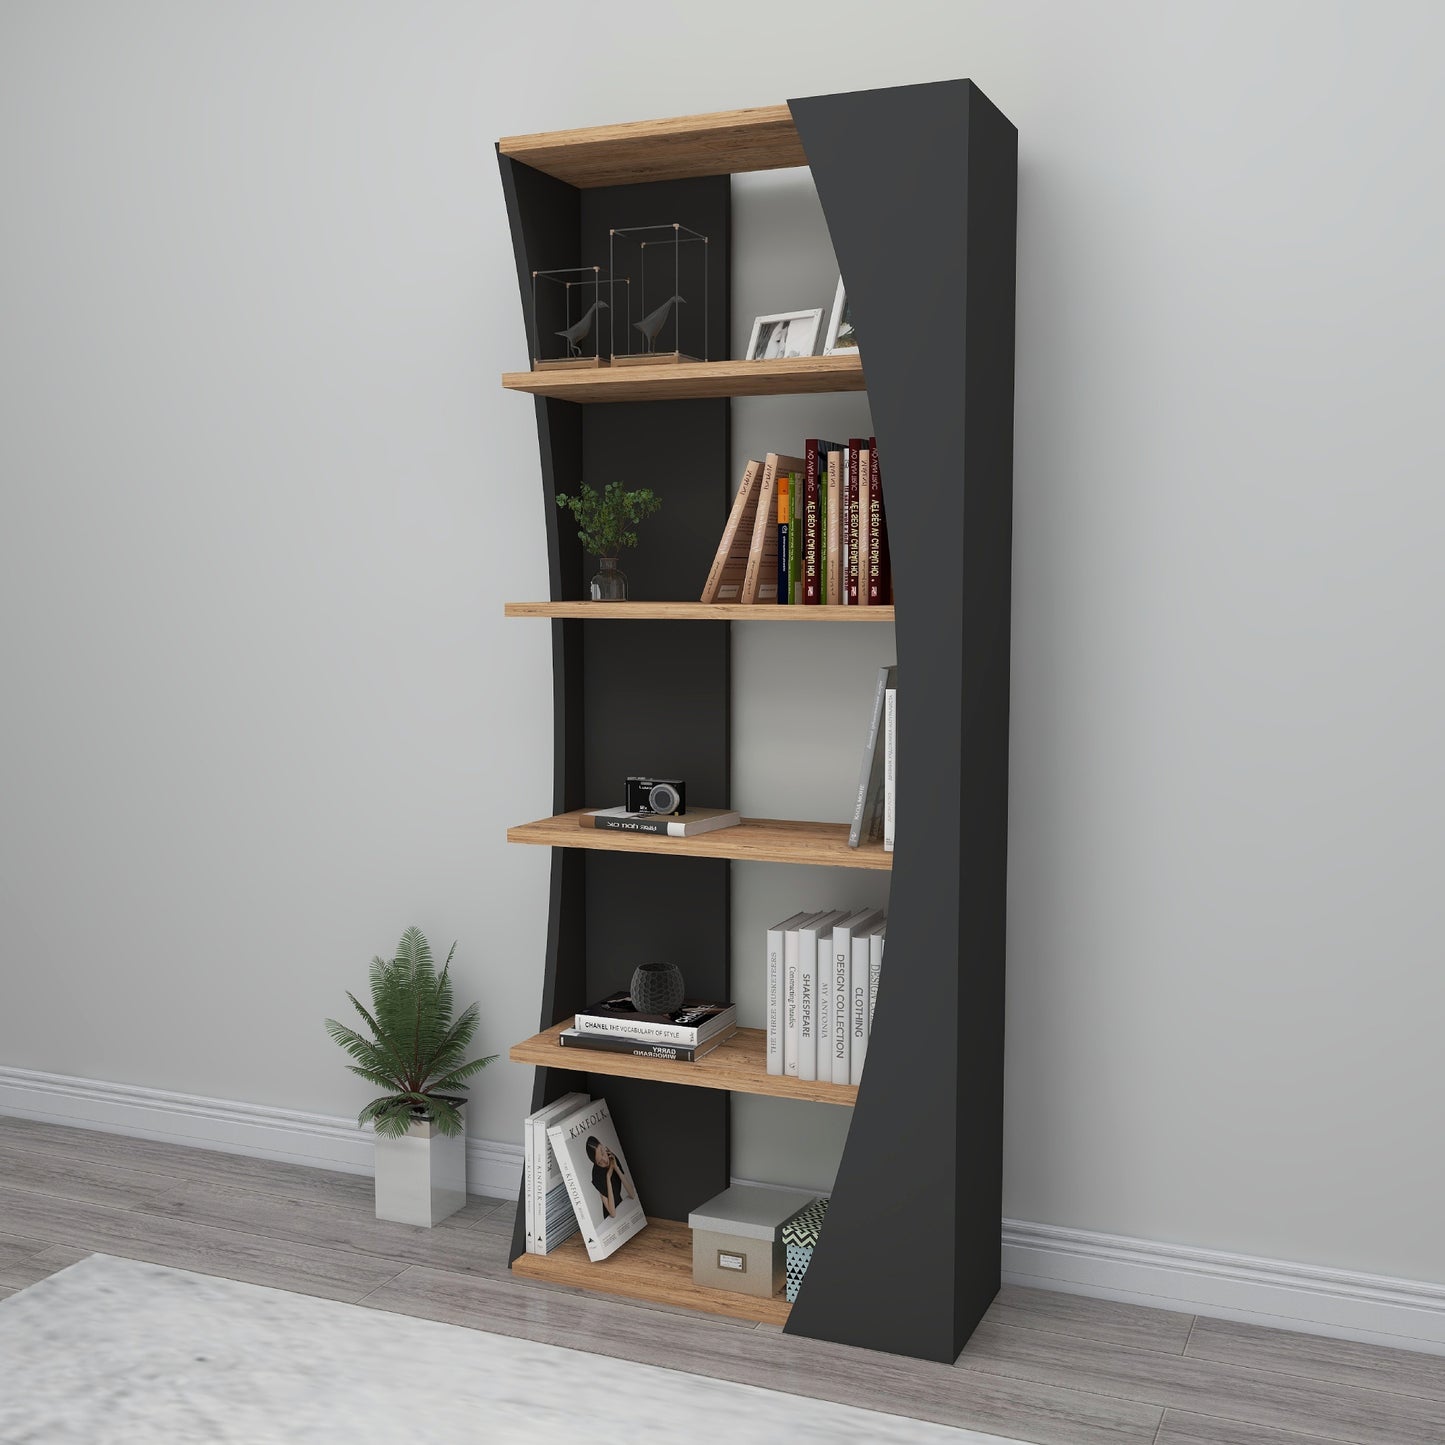 Bookcase, Bookshelf, Floating Bookcase, Floating Bookshelf, Shelving Unit, Shelf, Furniture, Home, Office, Living room, Study room 